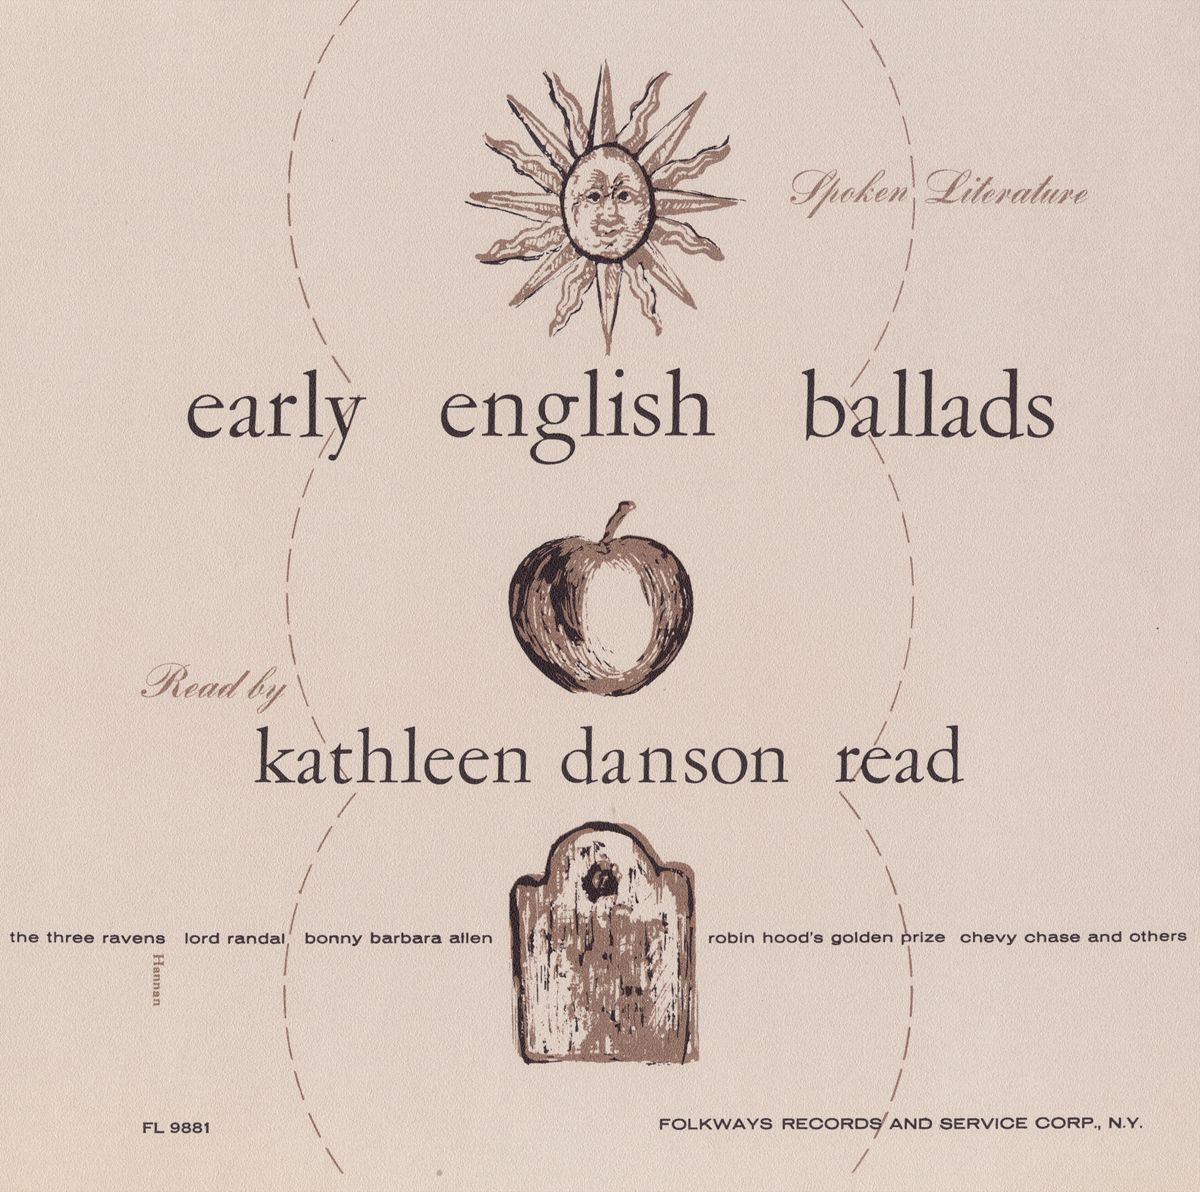 SPOKEN LITERATURE OF EARLY ENGLISH BALLADS